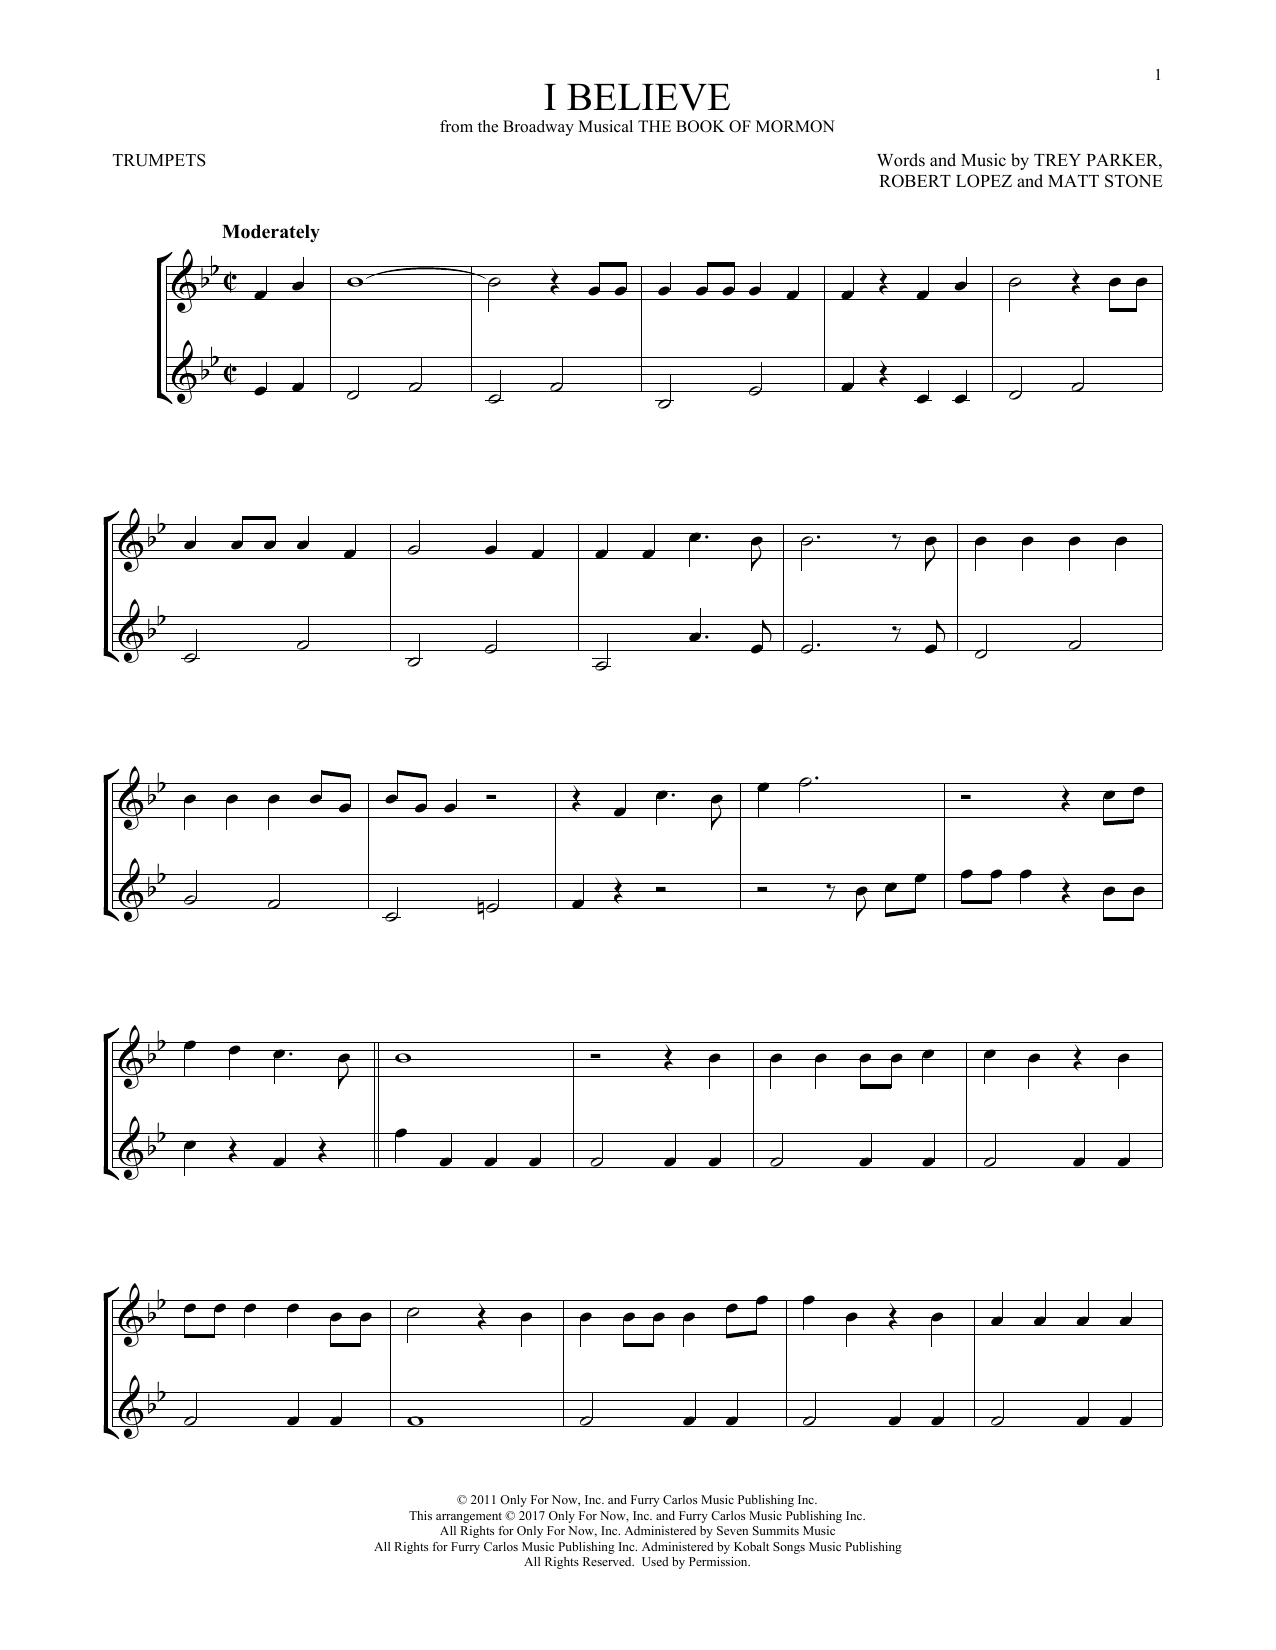 Trey Parker, Matt Stone & Robert Lopez I Believe Sheet Music Notes & Chords for Flute Duet - Download or Print PDF